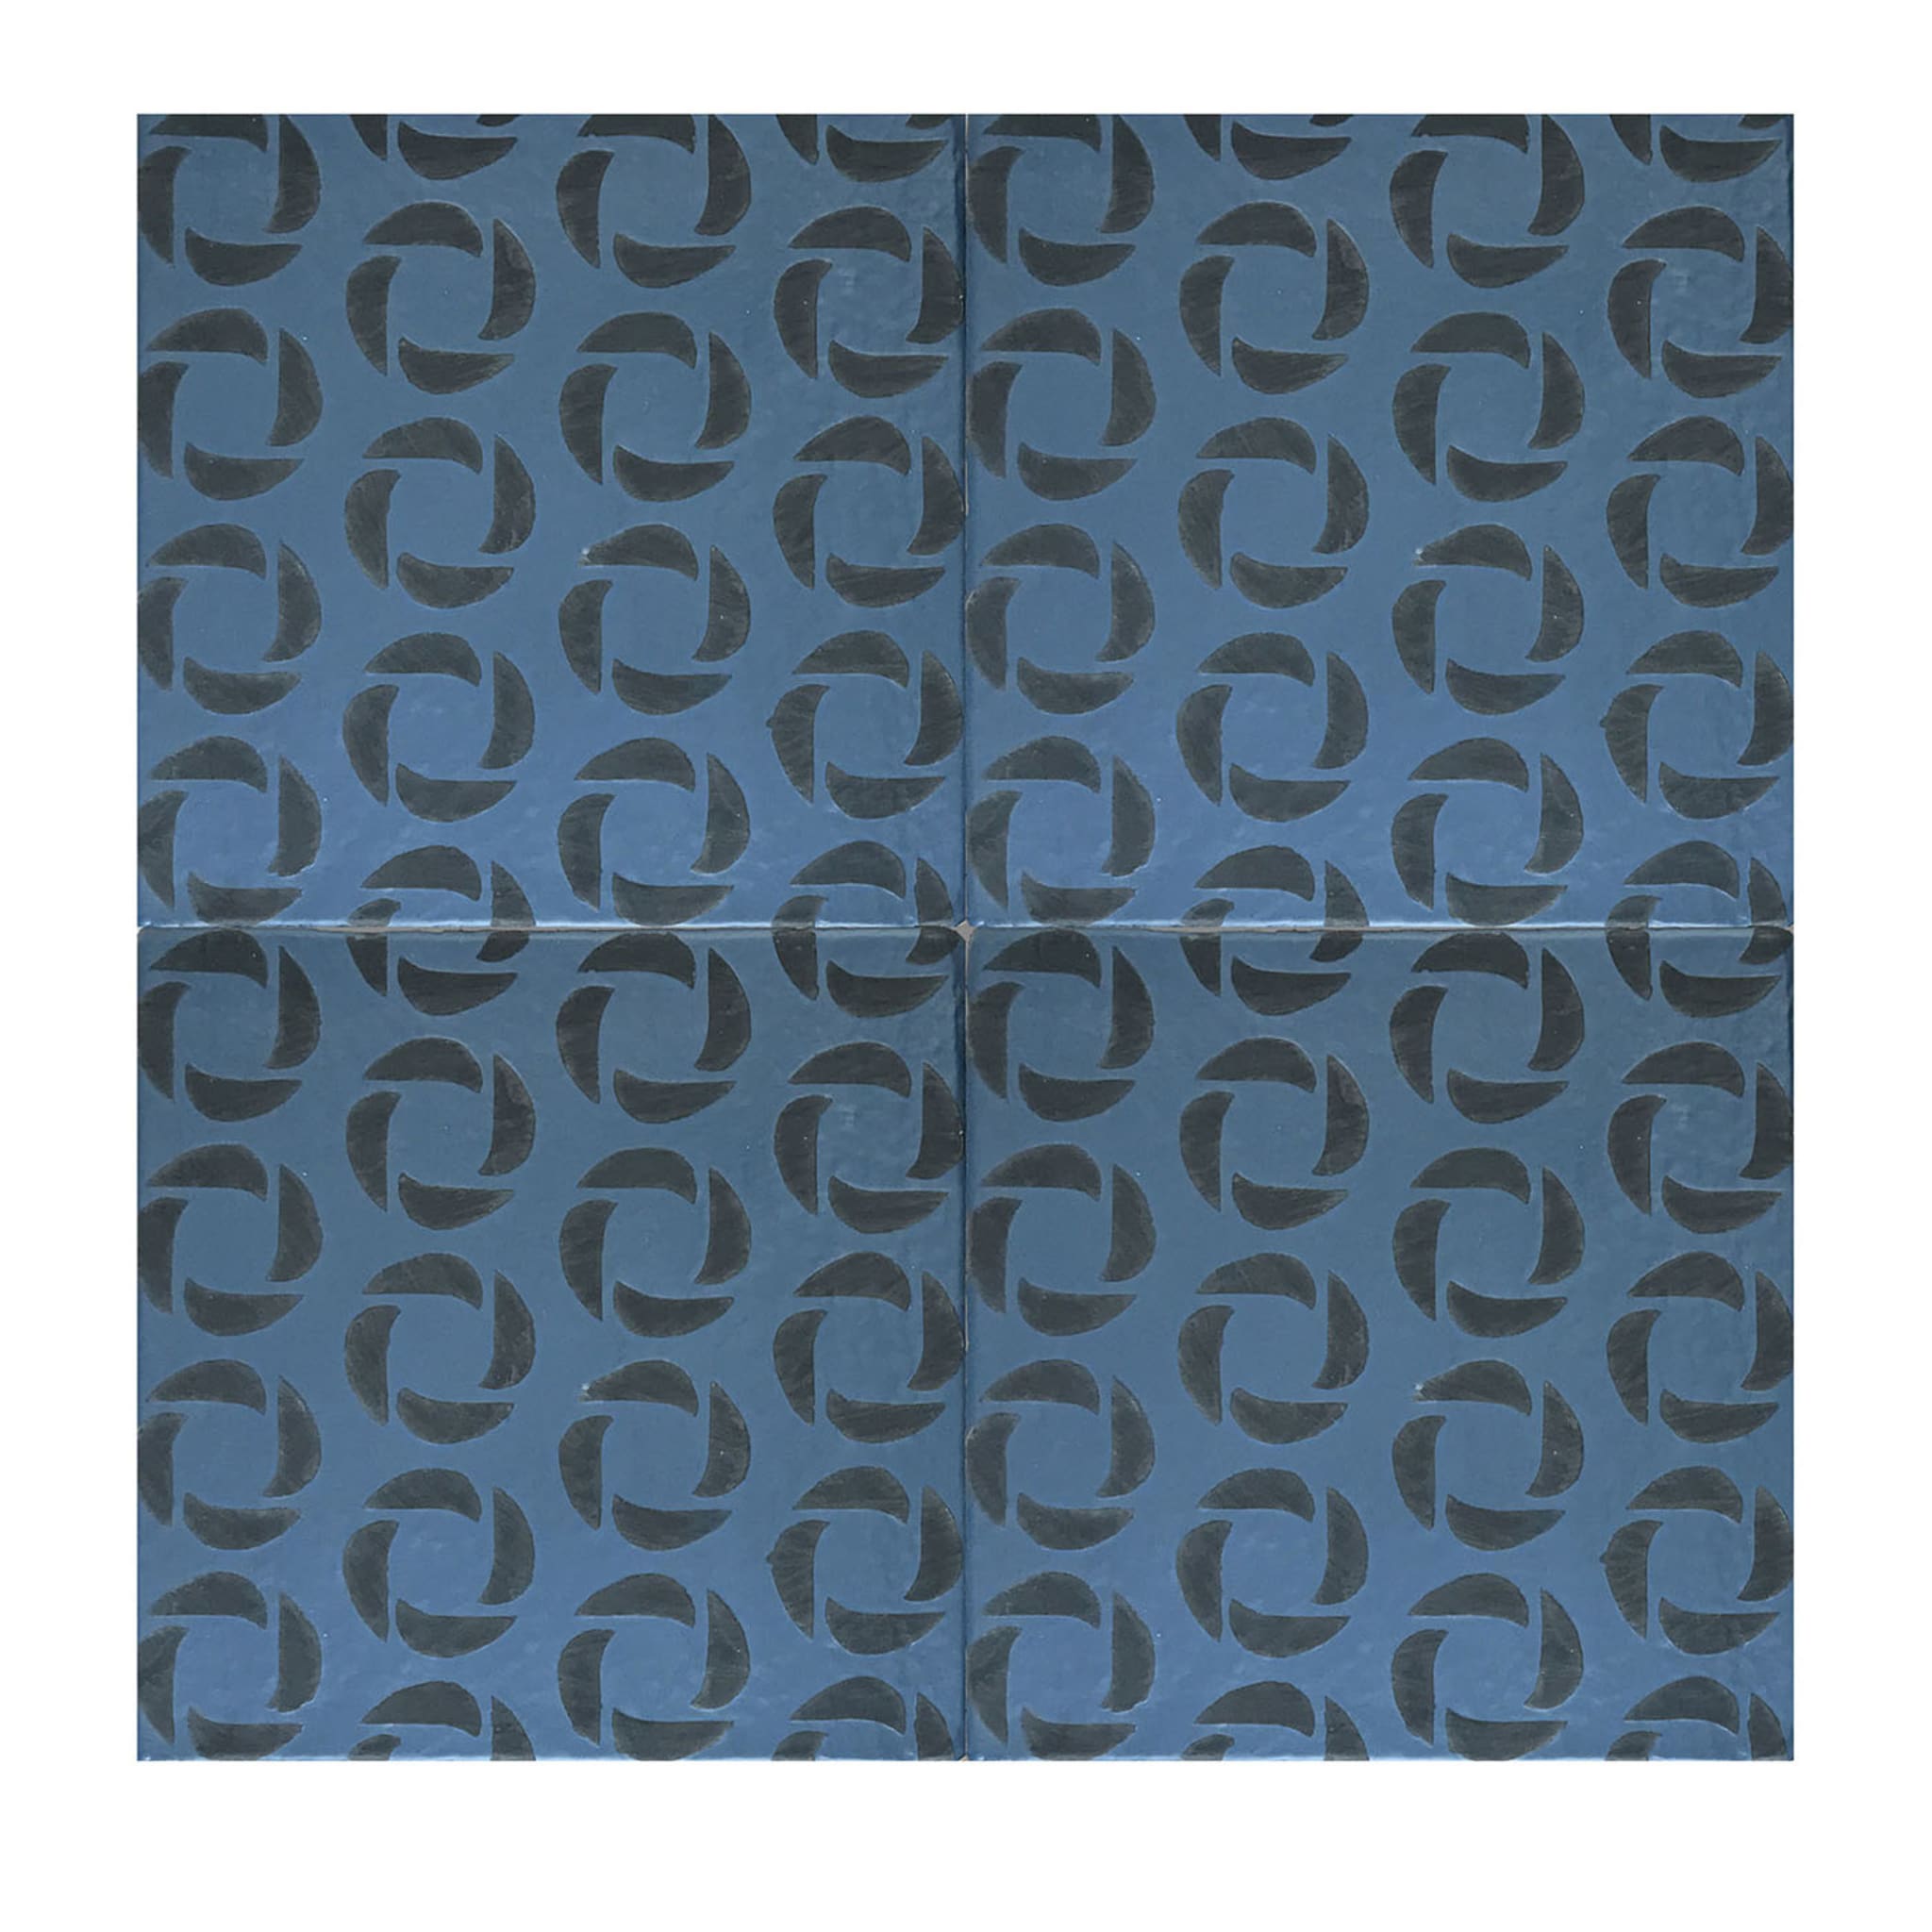 Daamè Set of 25 Square Blue Tiles #3 - Main view